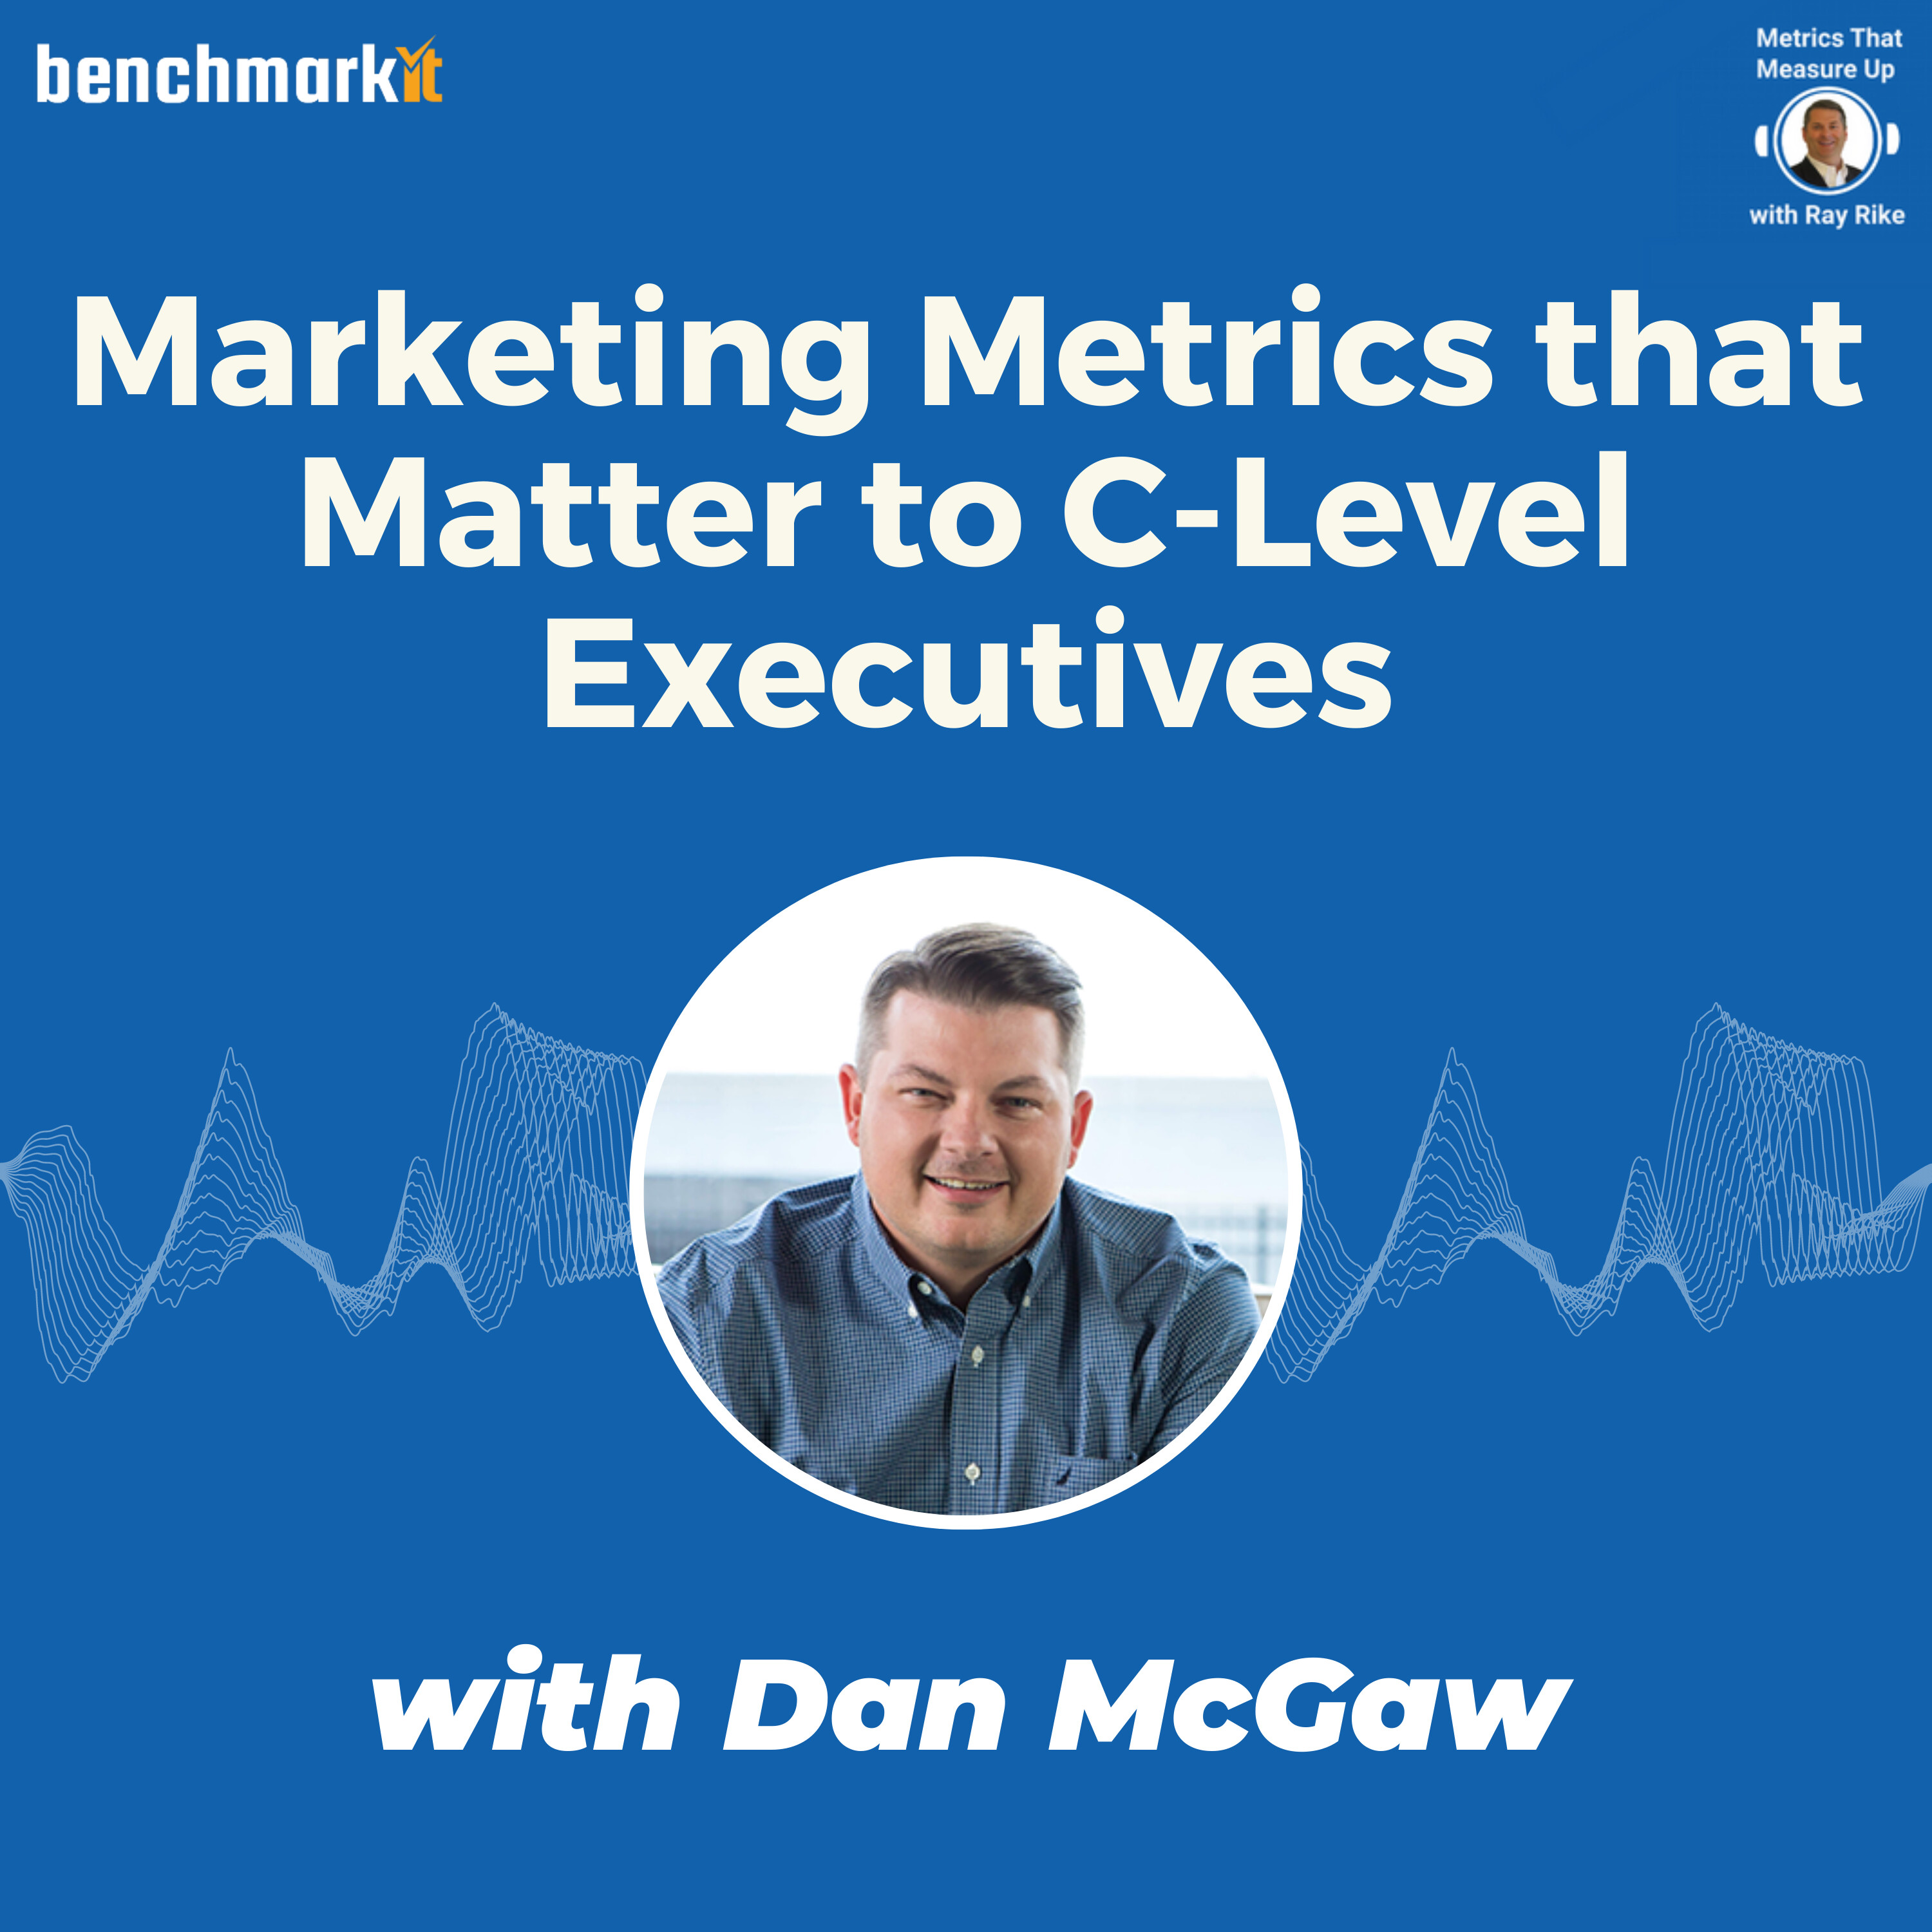 Marketing Metrics that Matter to C-Level Executives - with Dan McGaw